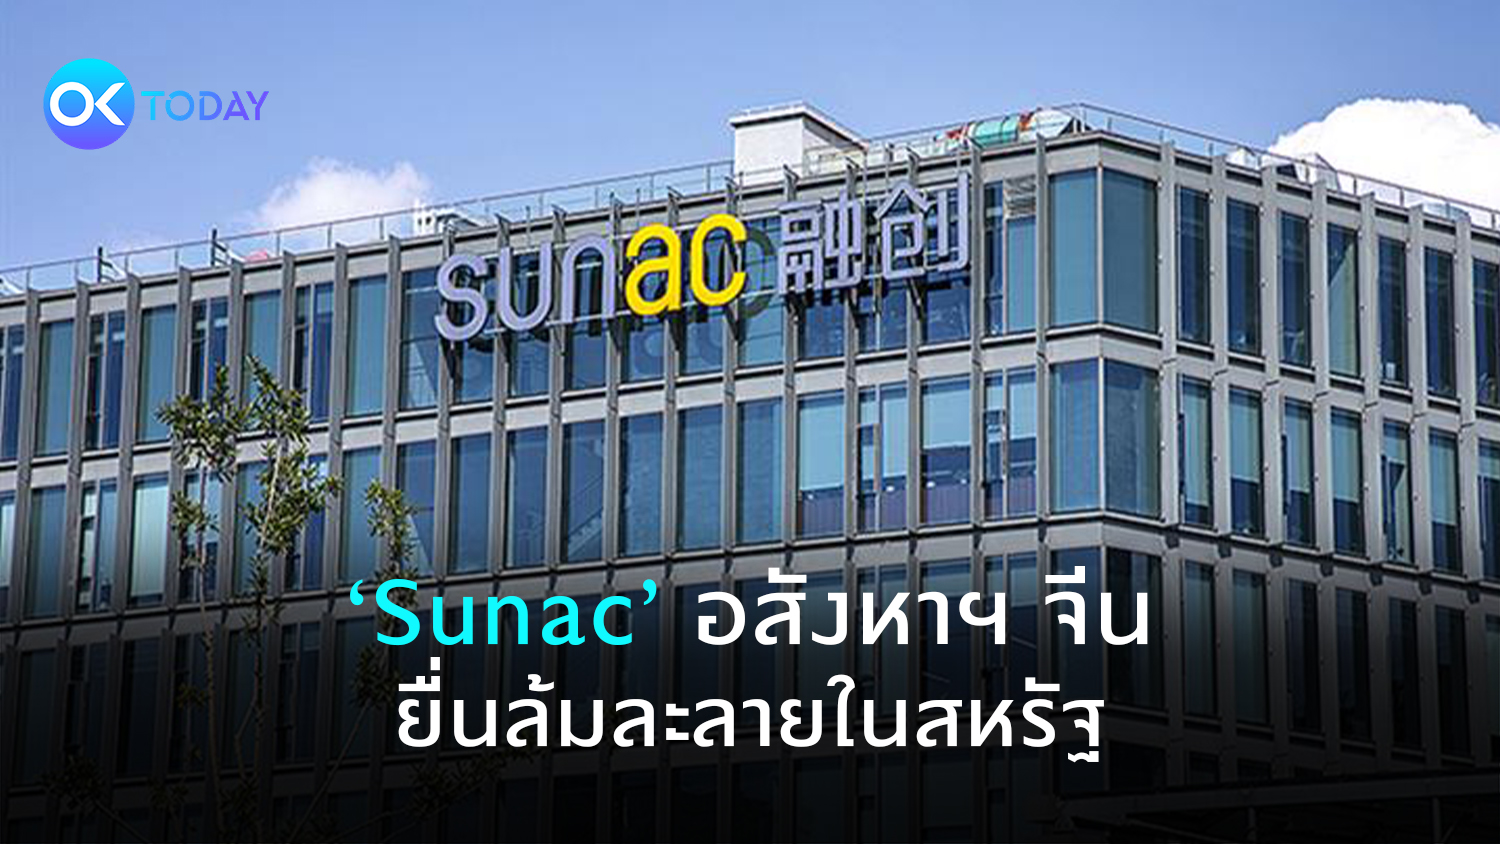 ‘Sunac’ อสังหาฯ จีน ยื่นล้มละลายในสหรัฐ